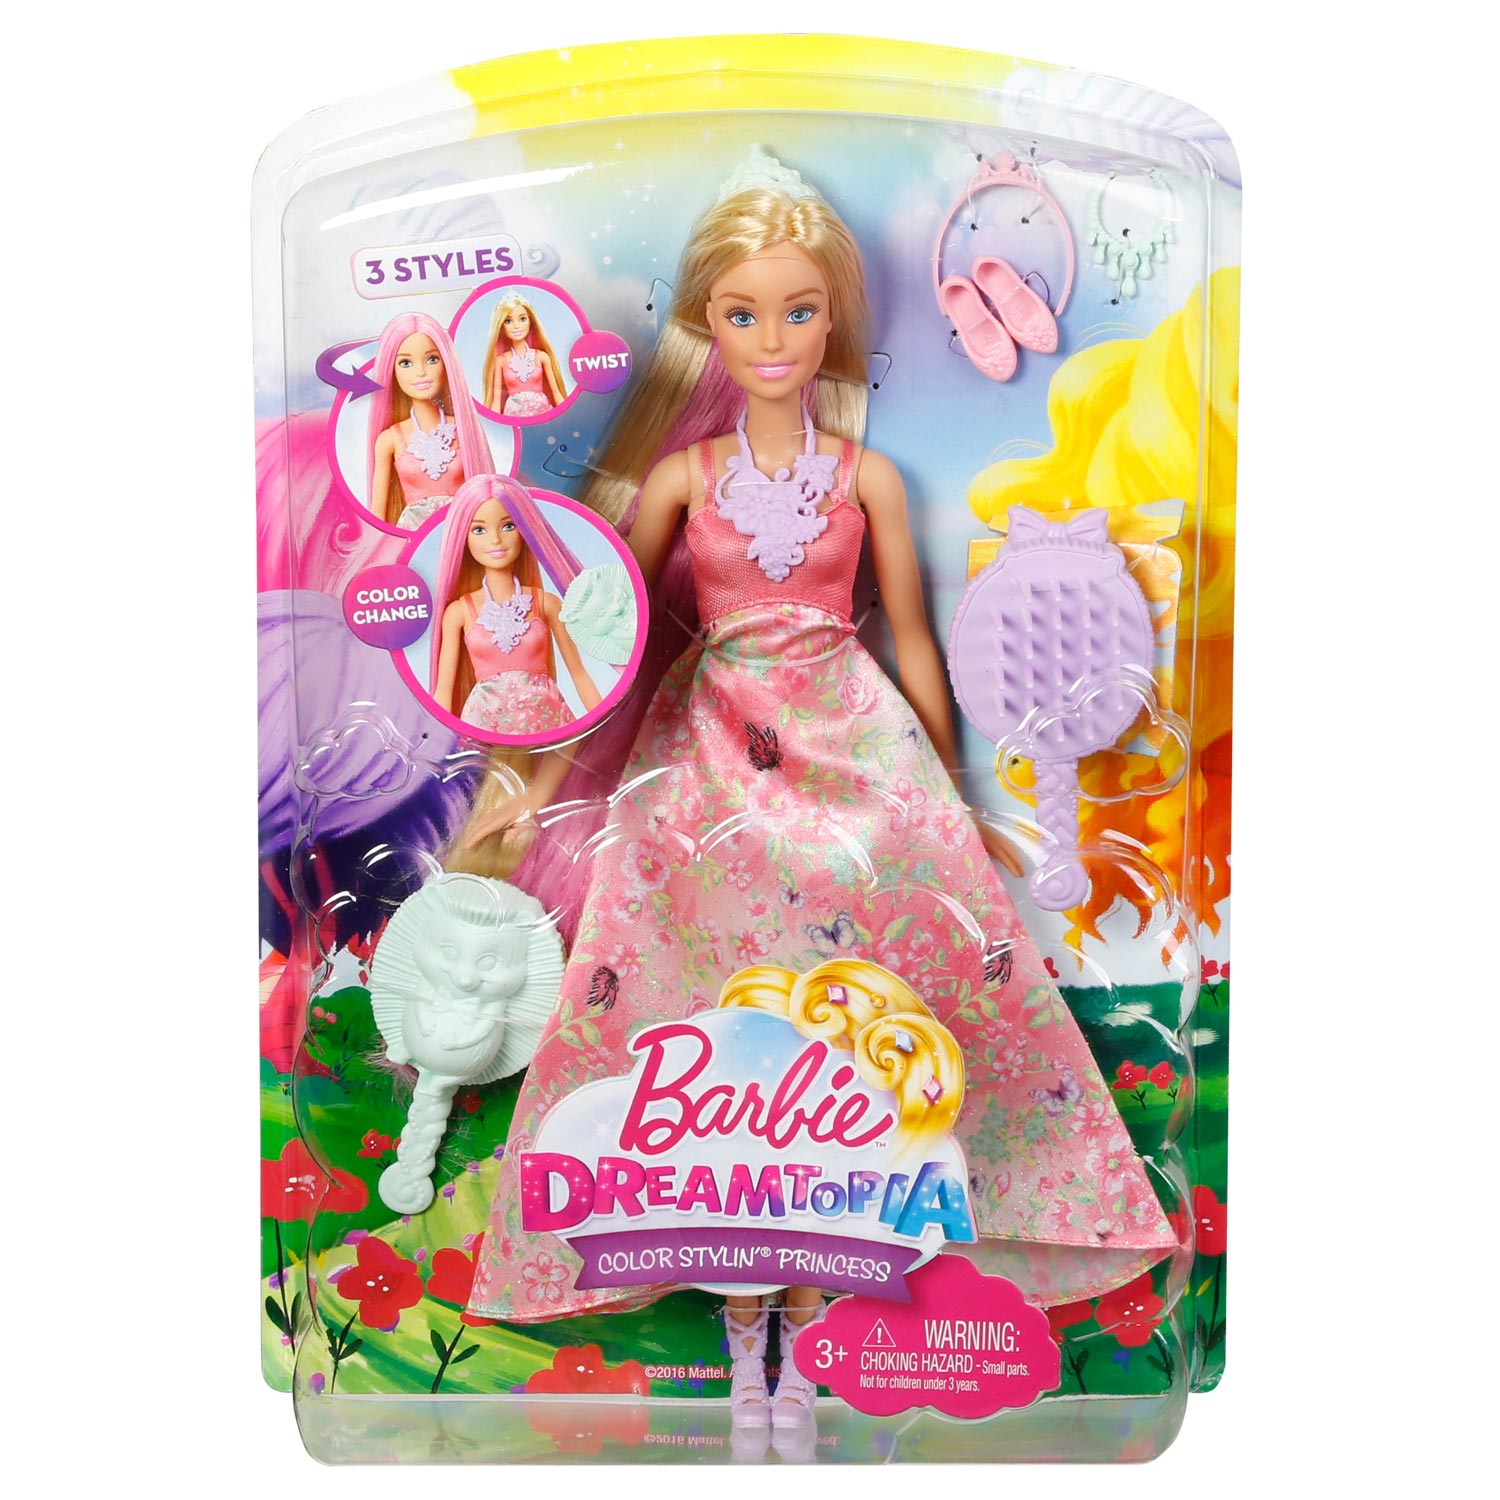 Barbie Dreamtopia  Color Stylin' Prinses - Blond